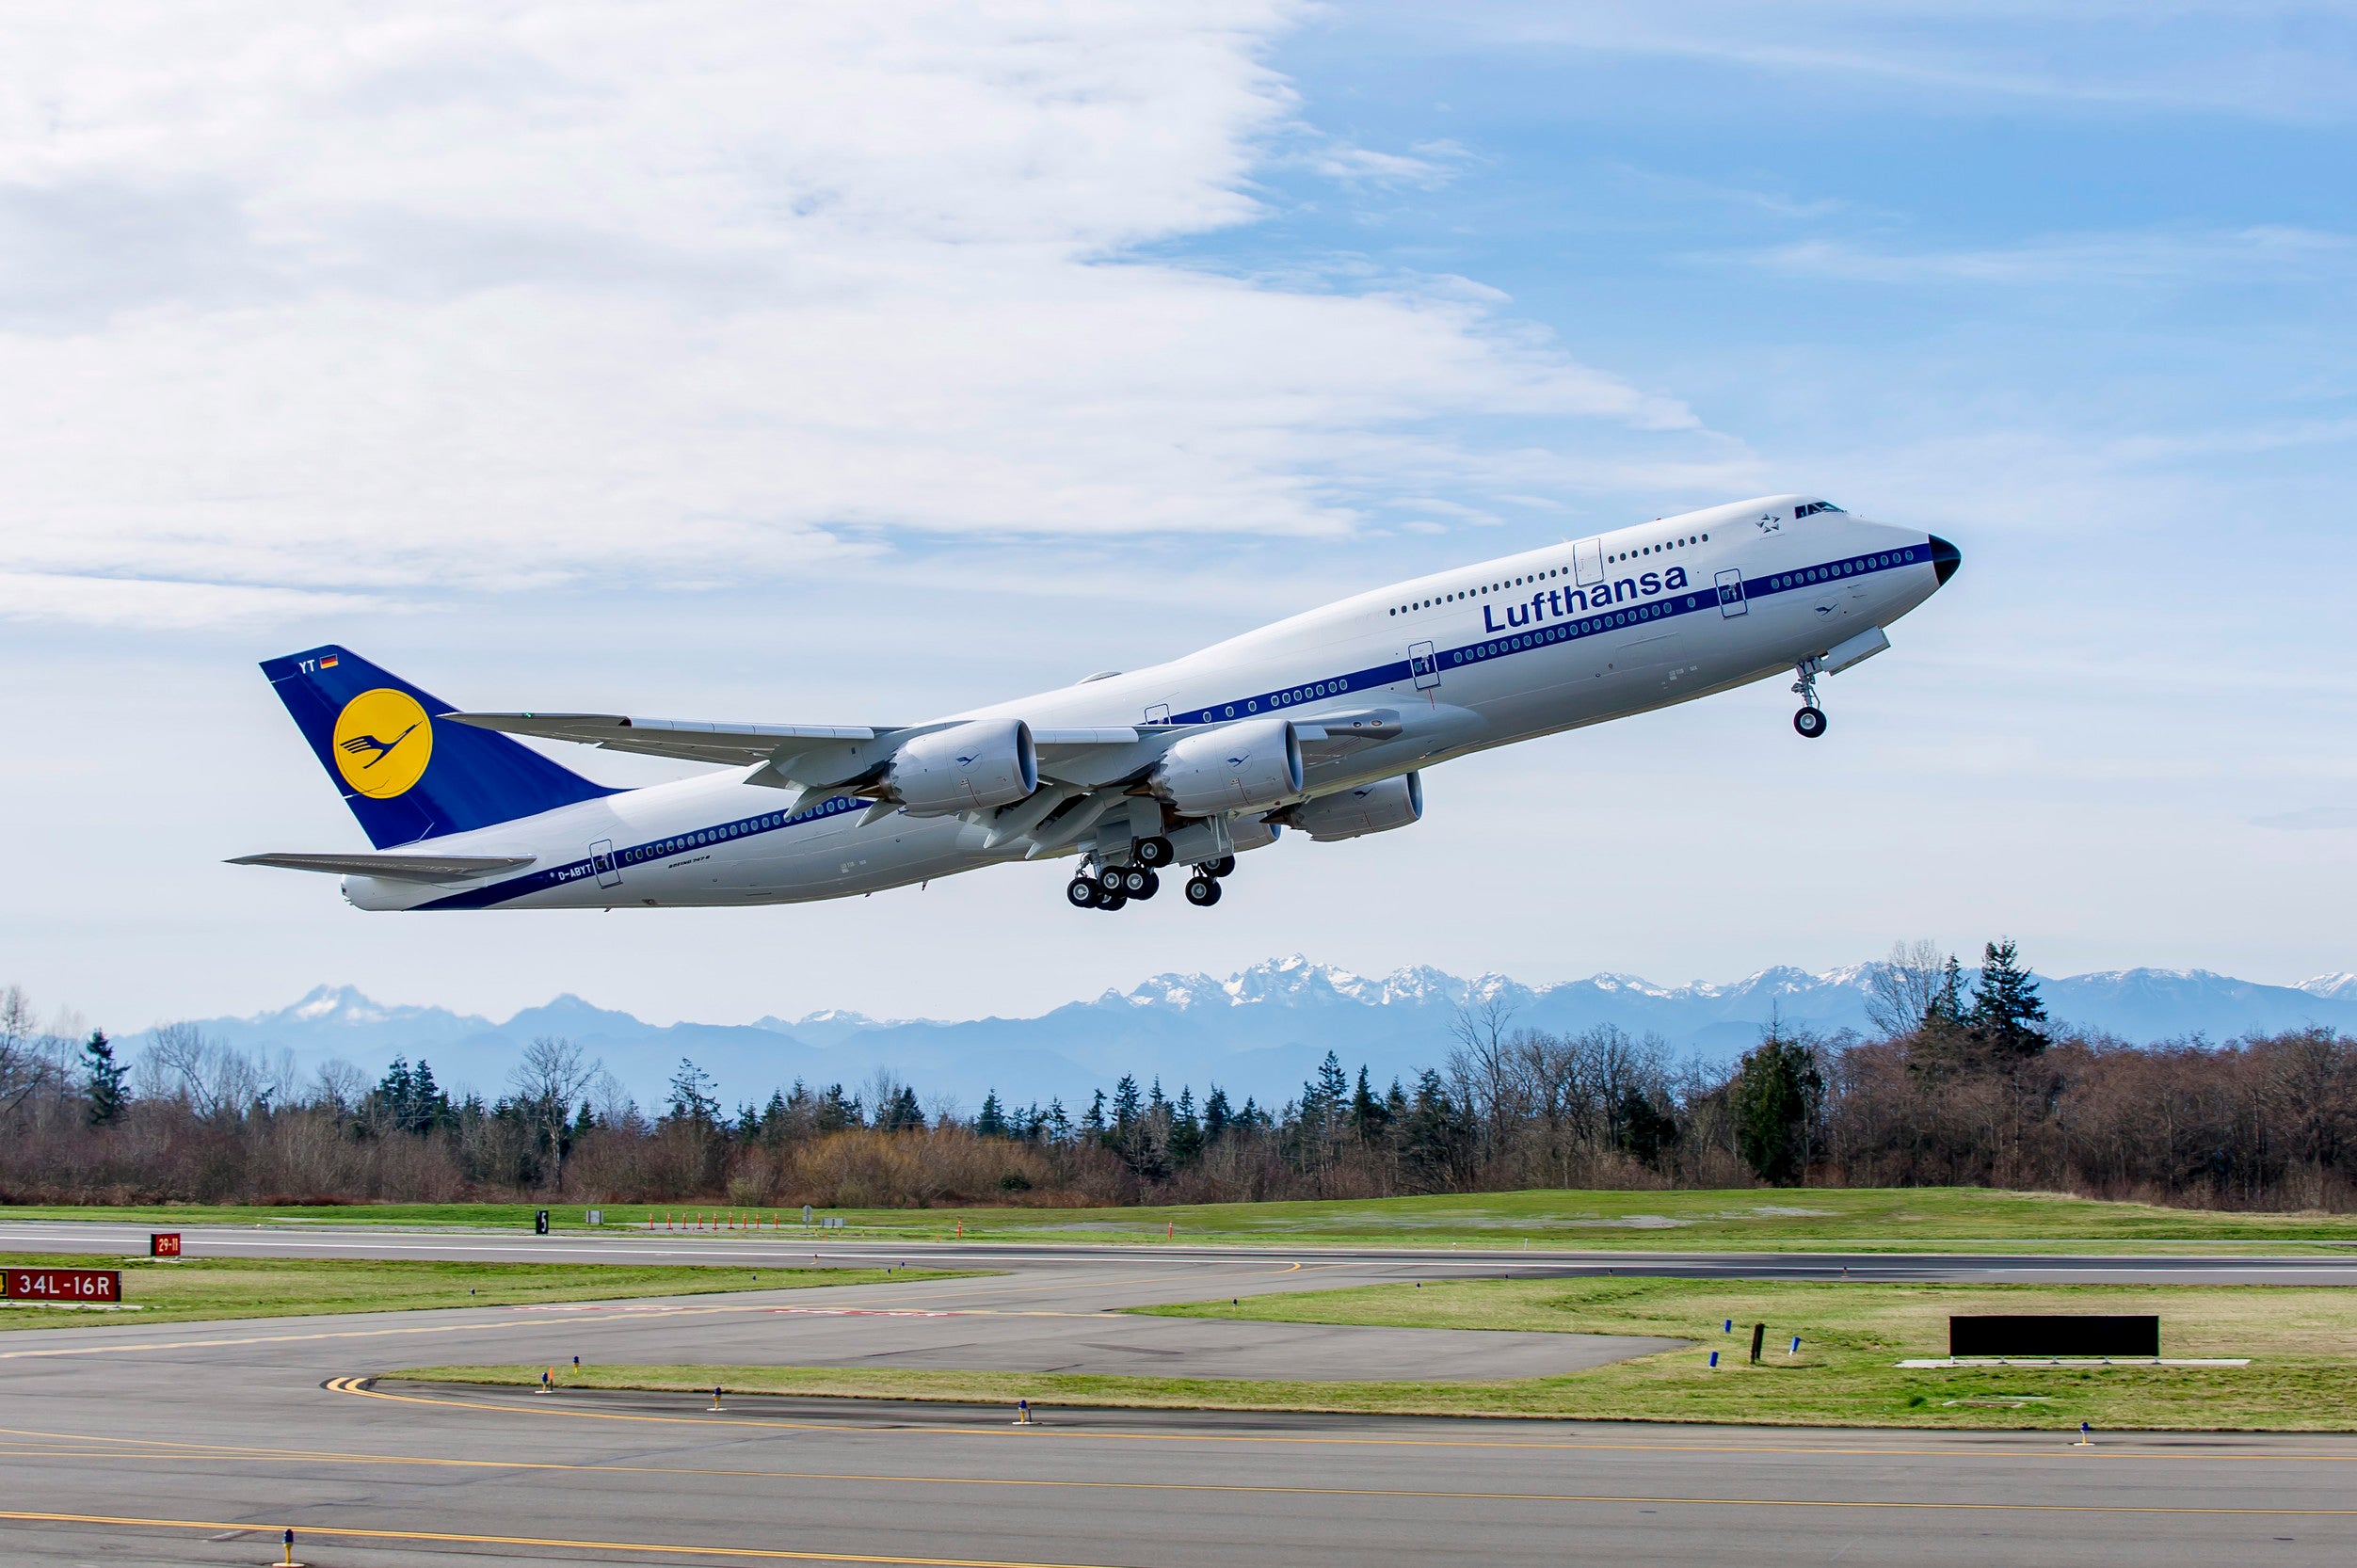 747-8 Lufthansa in retro colors